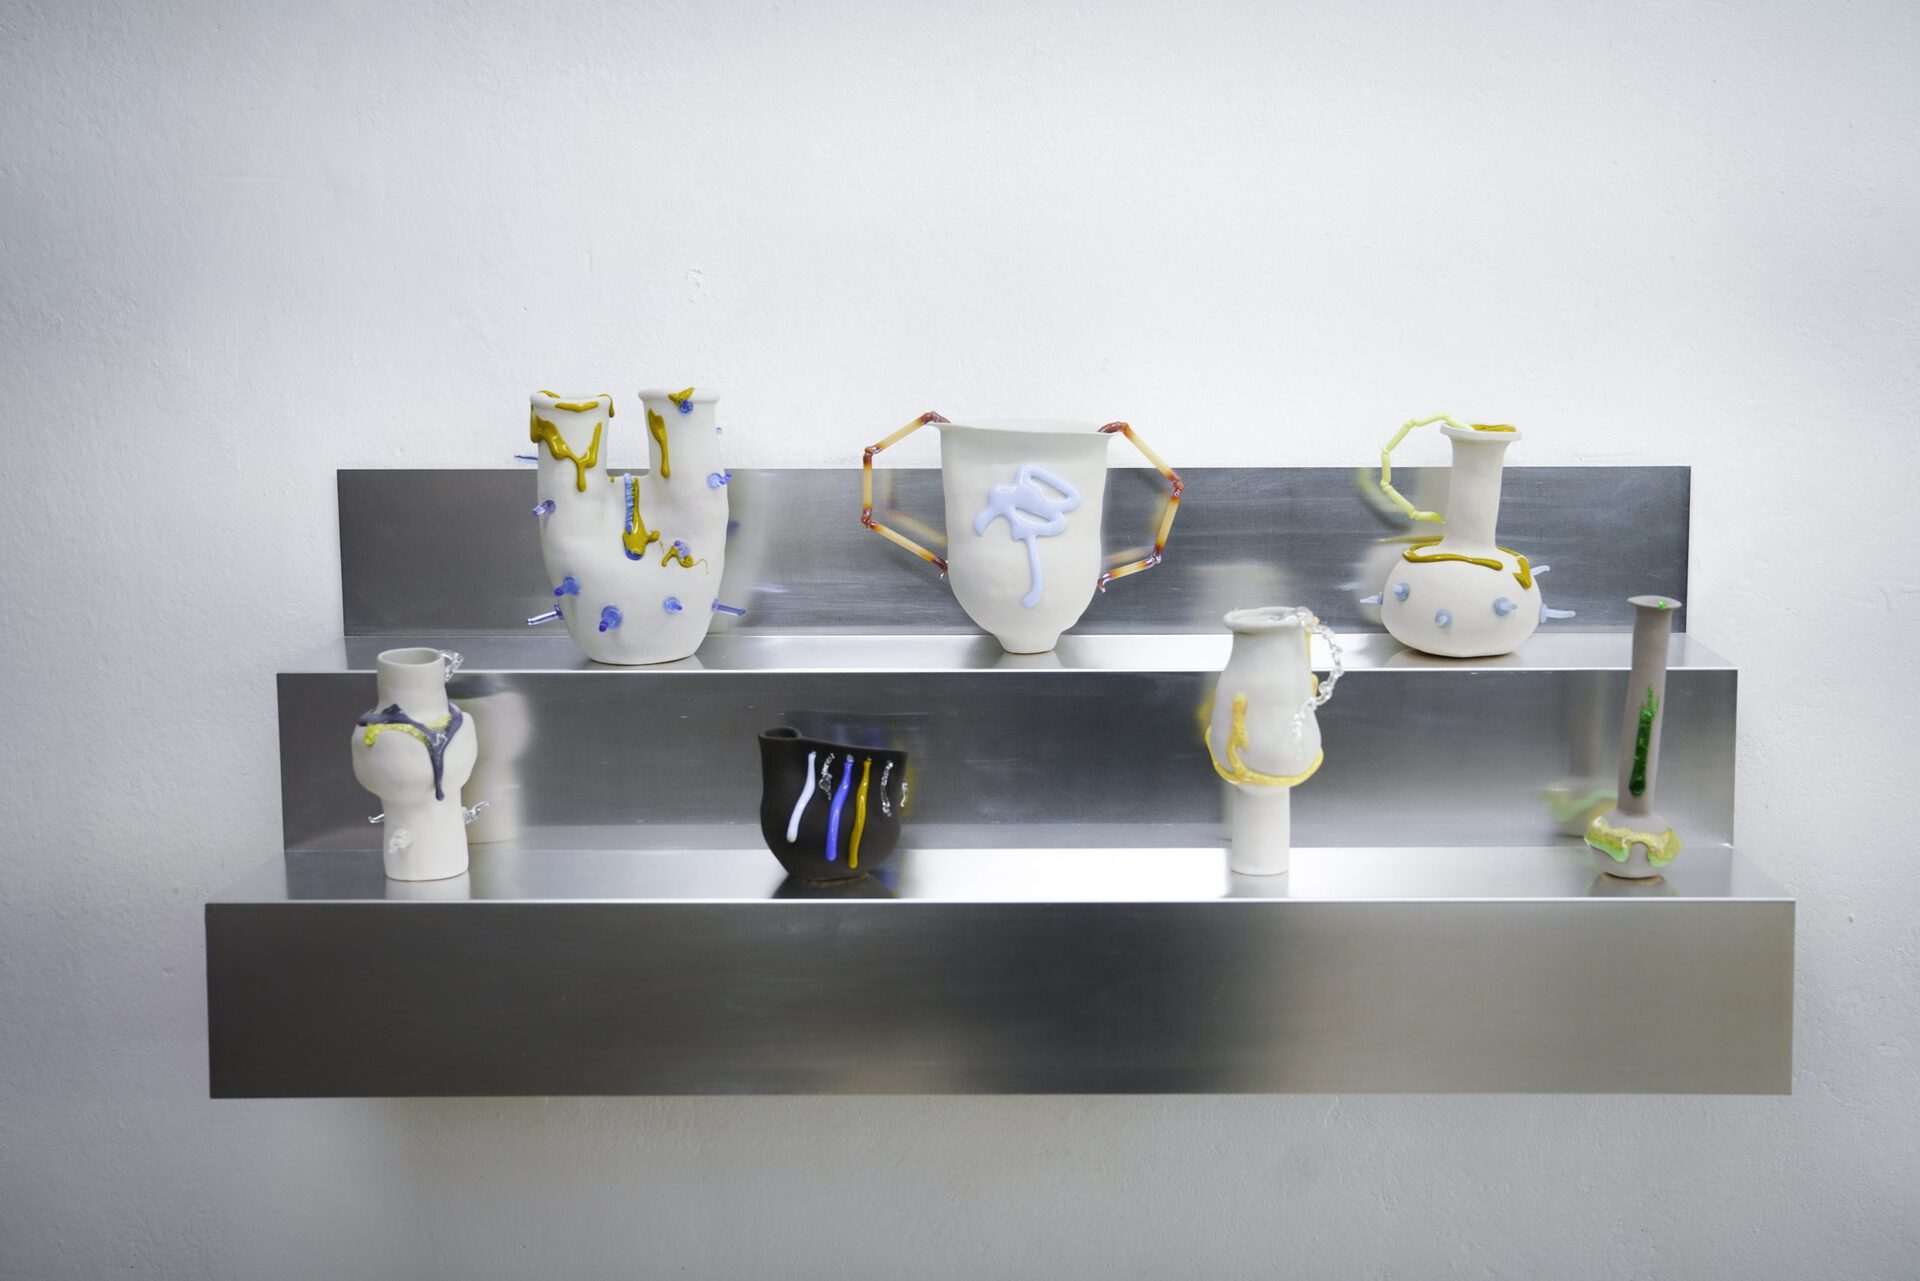 Anne–Sophie Oberkrome, Lisa Ertel, Juliana Maurer, Serpent Squiggles, 2022, ceramic, glass